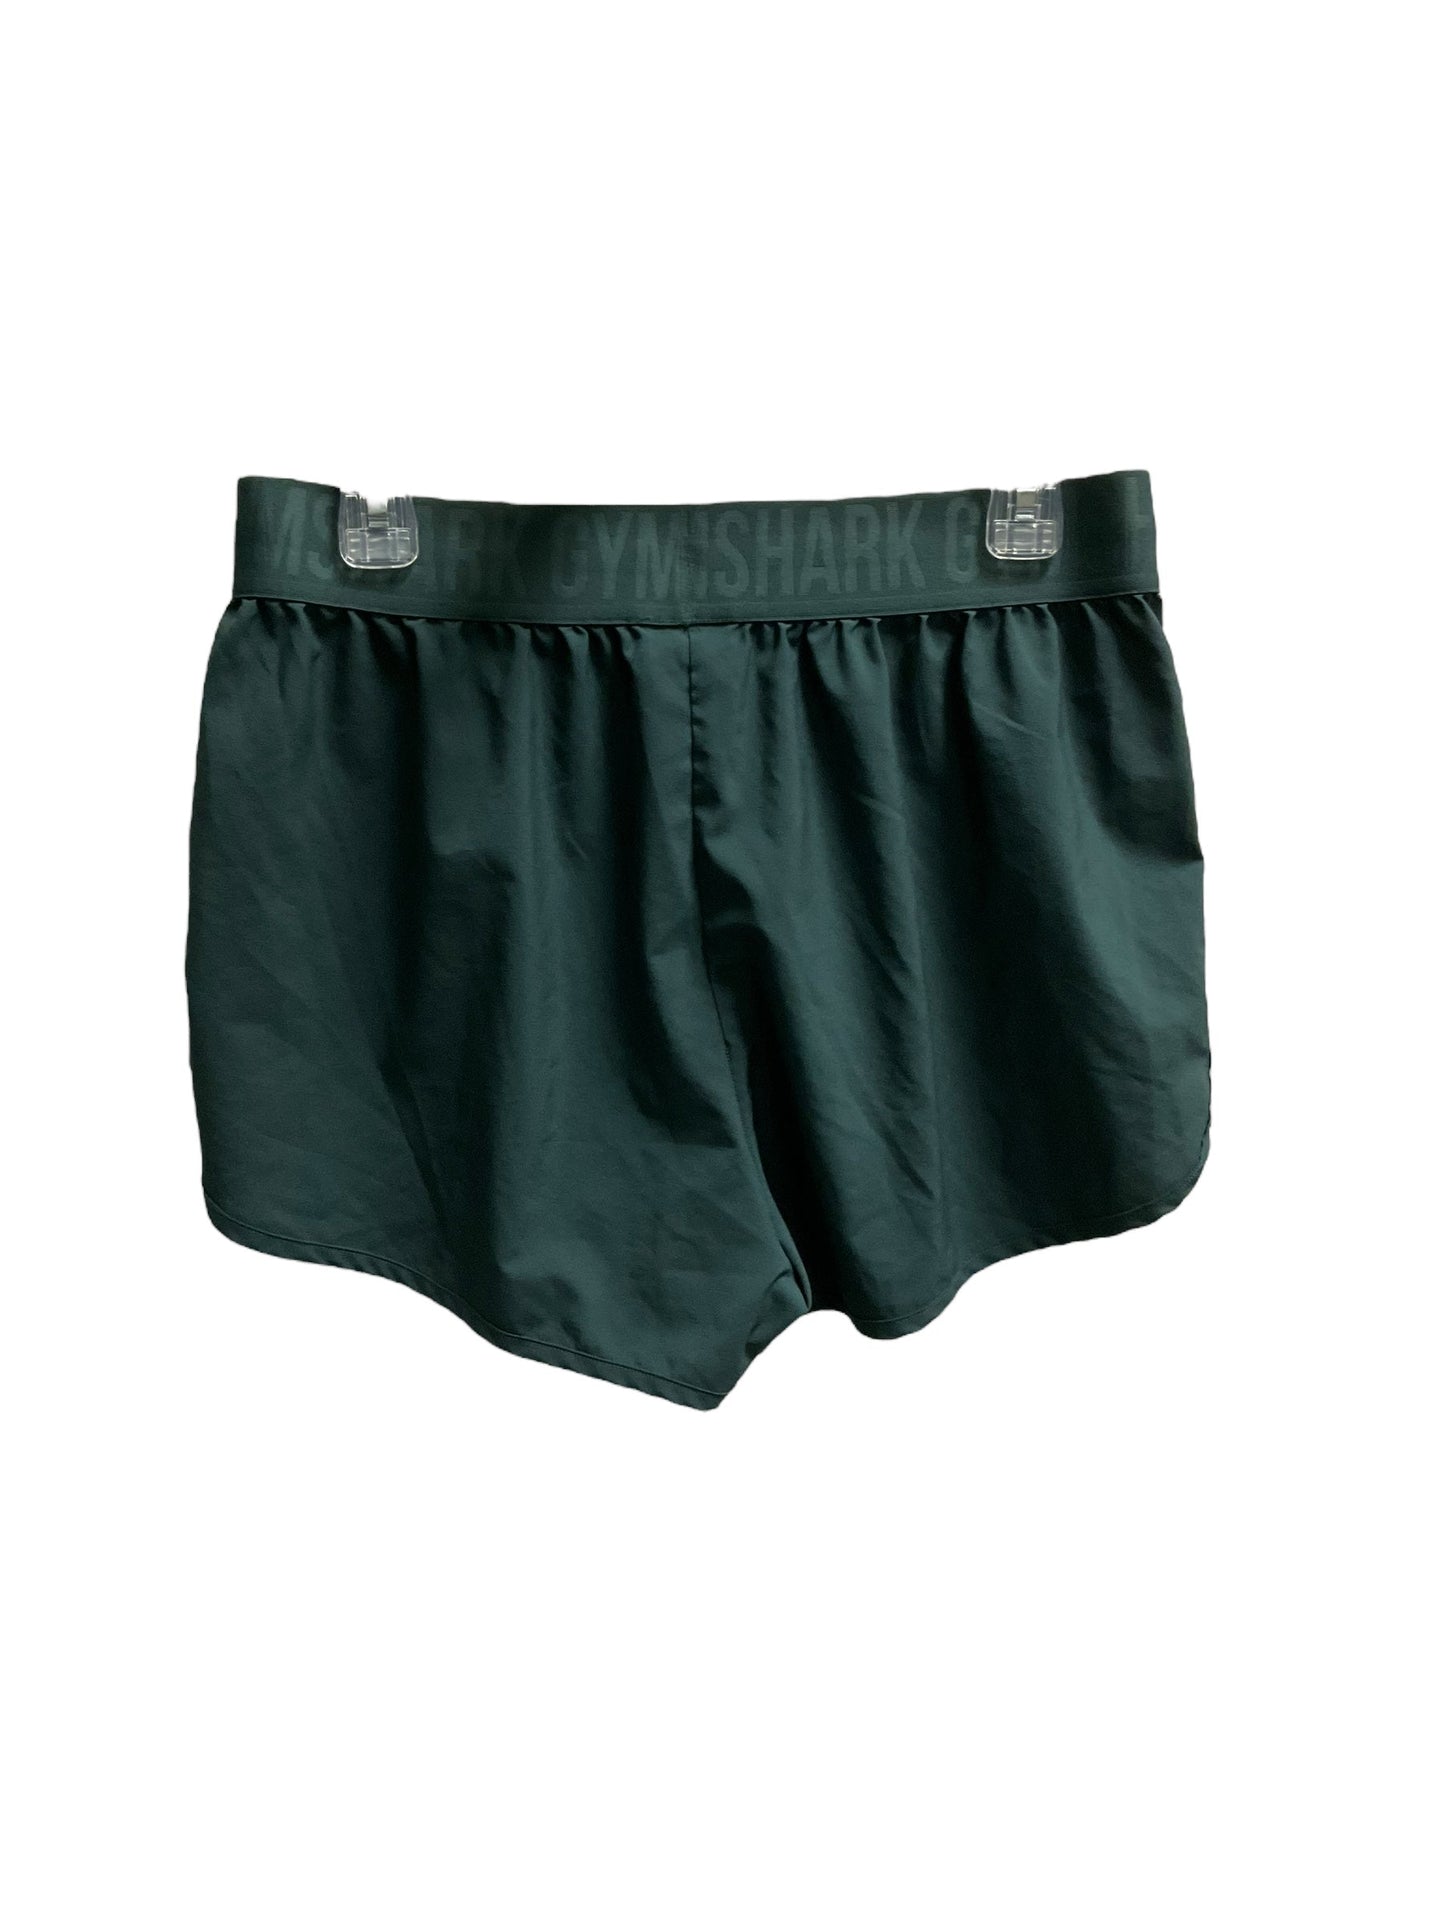 Green Athletic Shorts Gym Shark, Size L